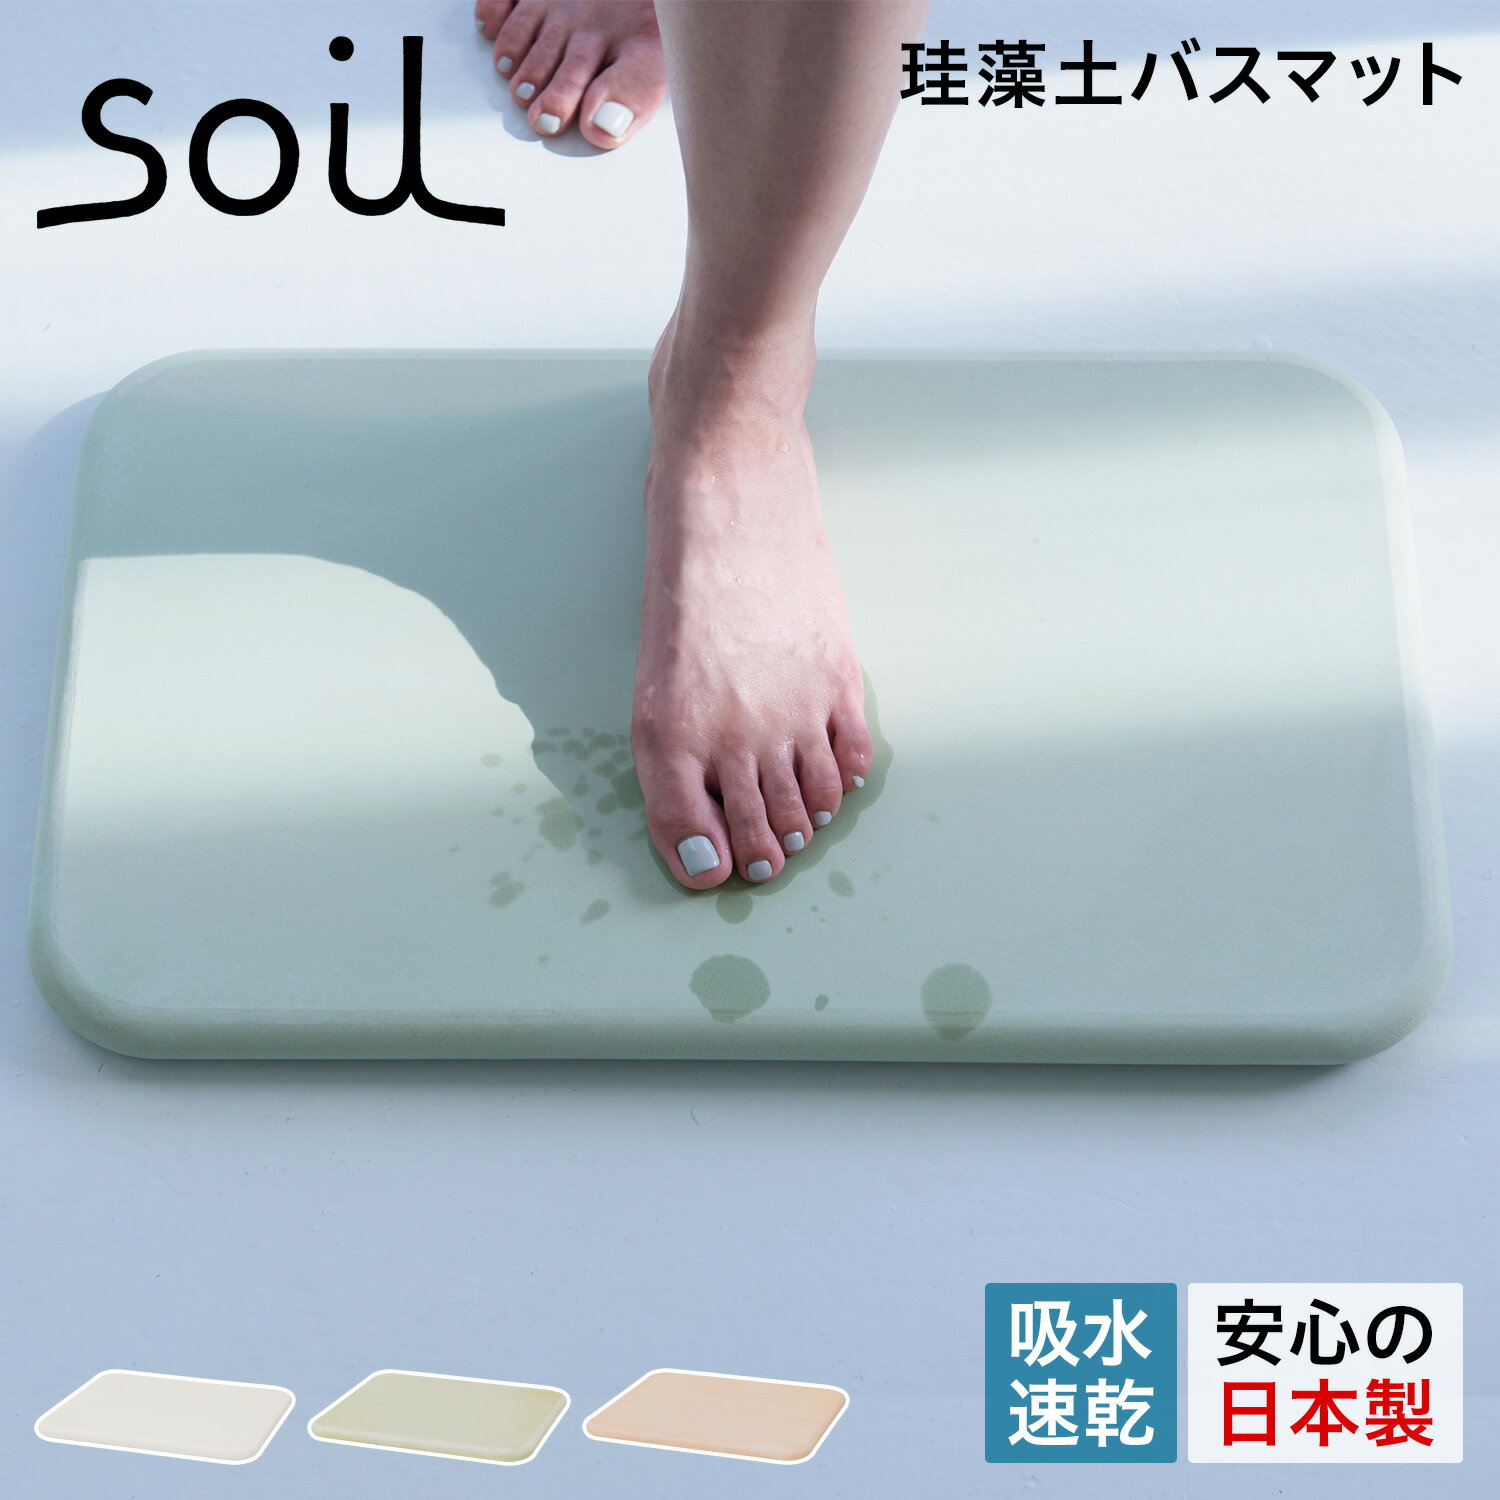 soil ソイル バスマット 珪藻土 足ふきマット 速乾 ノンアスベスト 日本製 BATH MAT B137